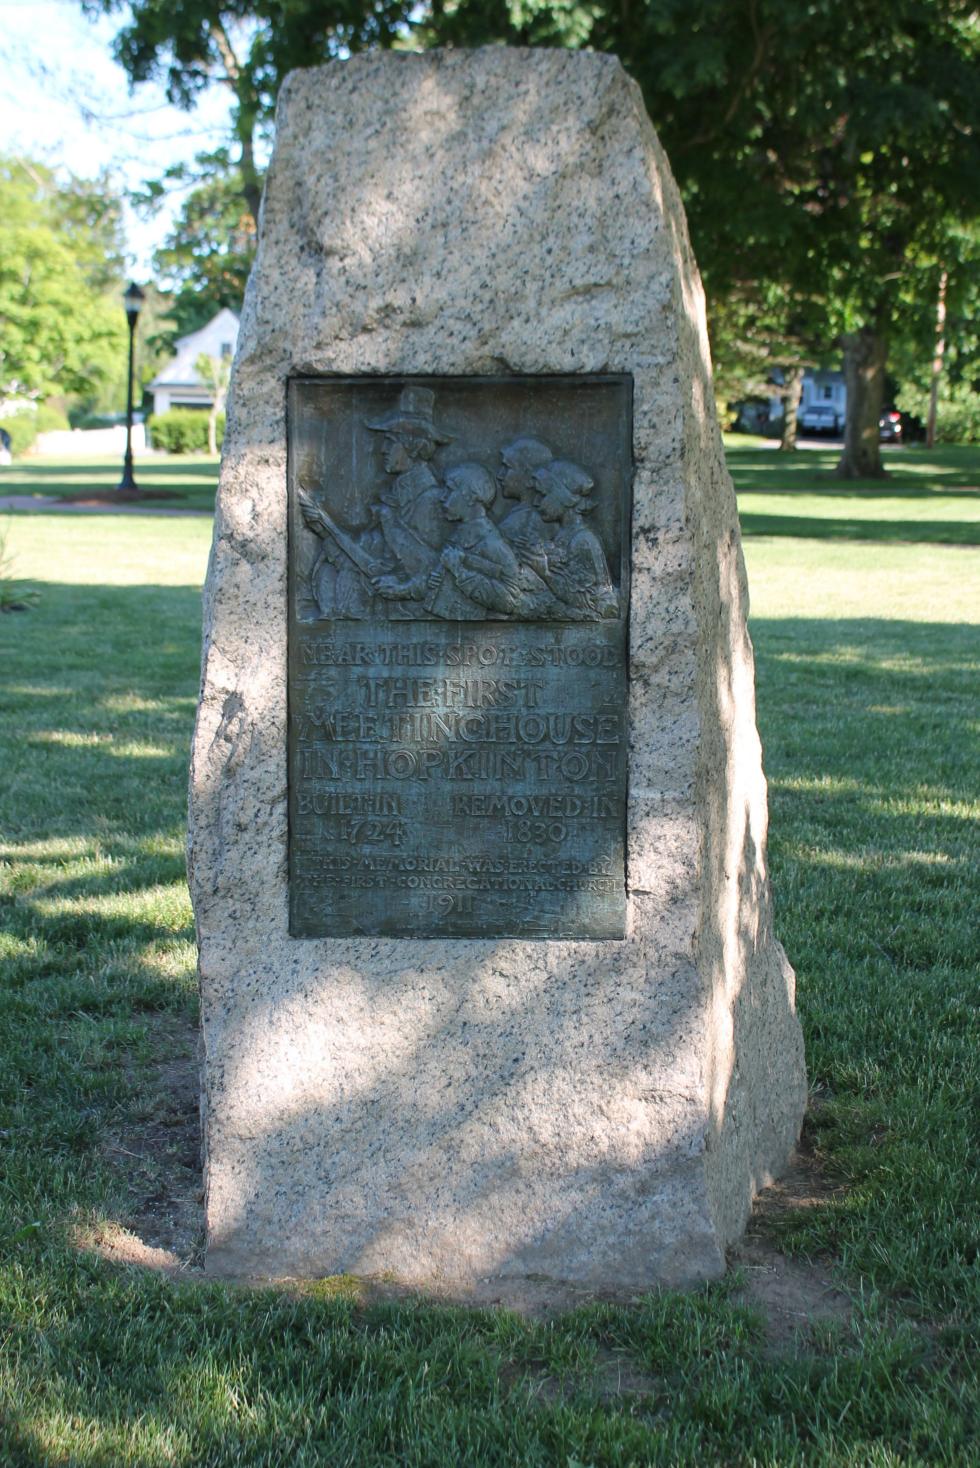 Hopkinton Massachusetts First Meeting House Memorial